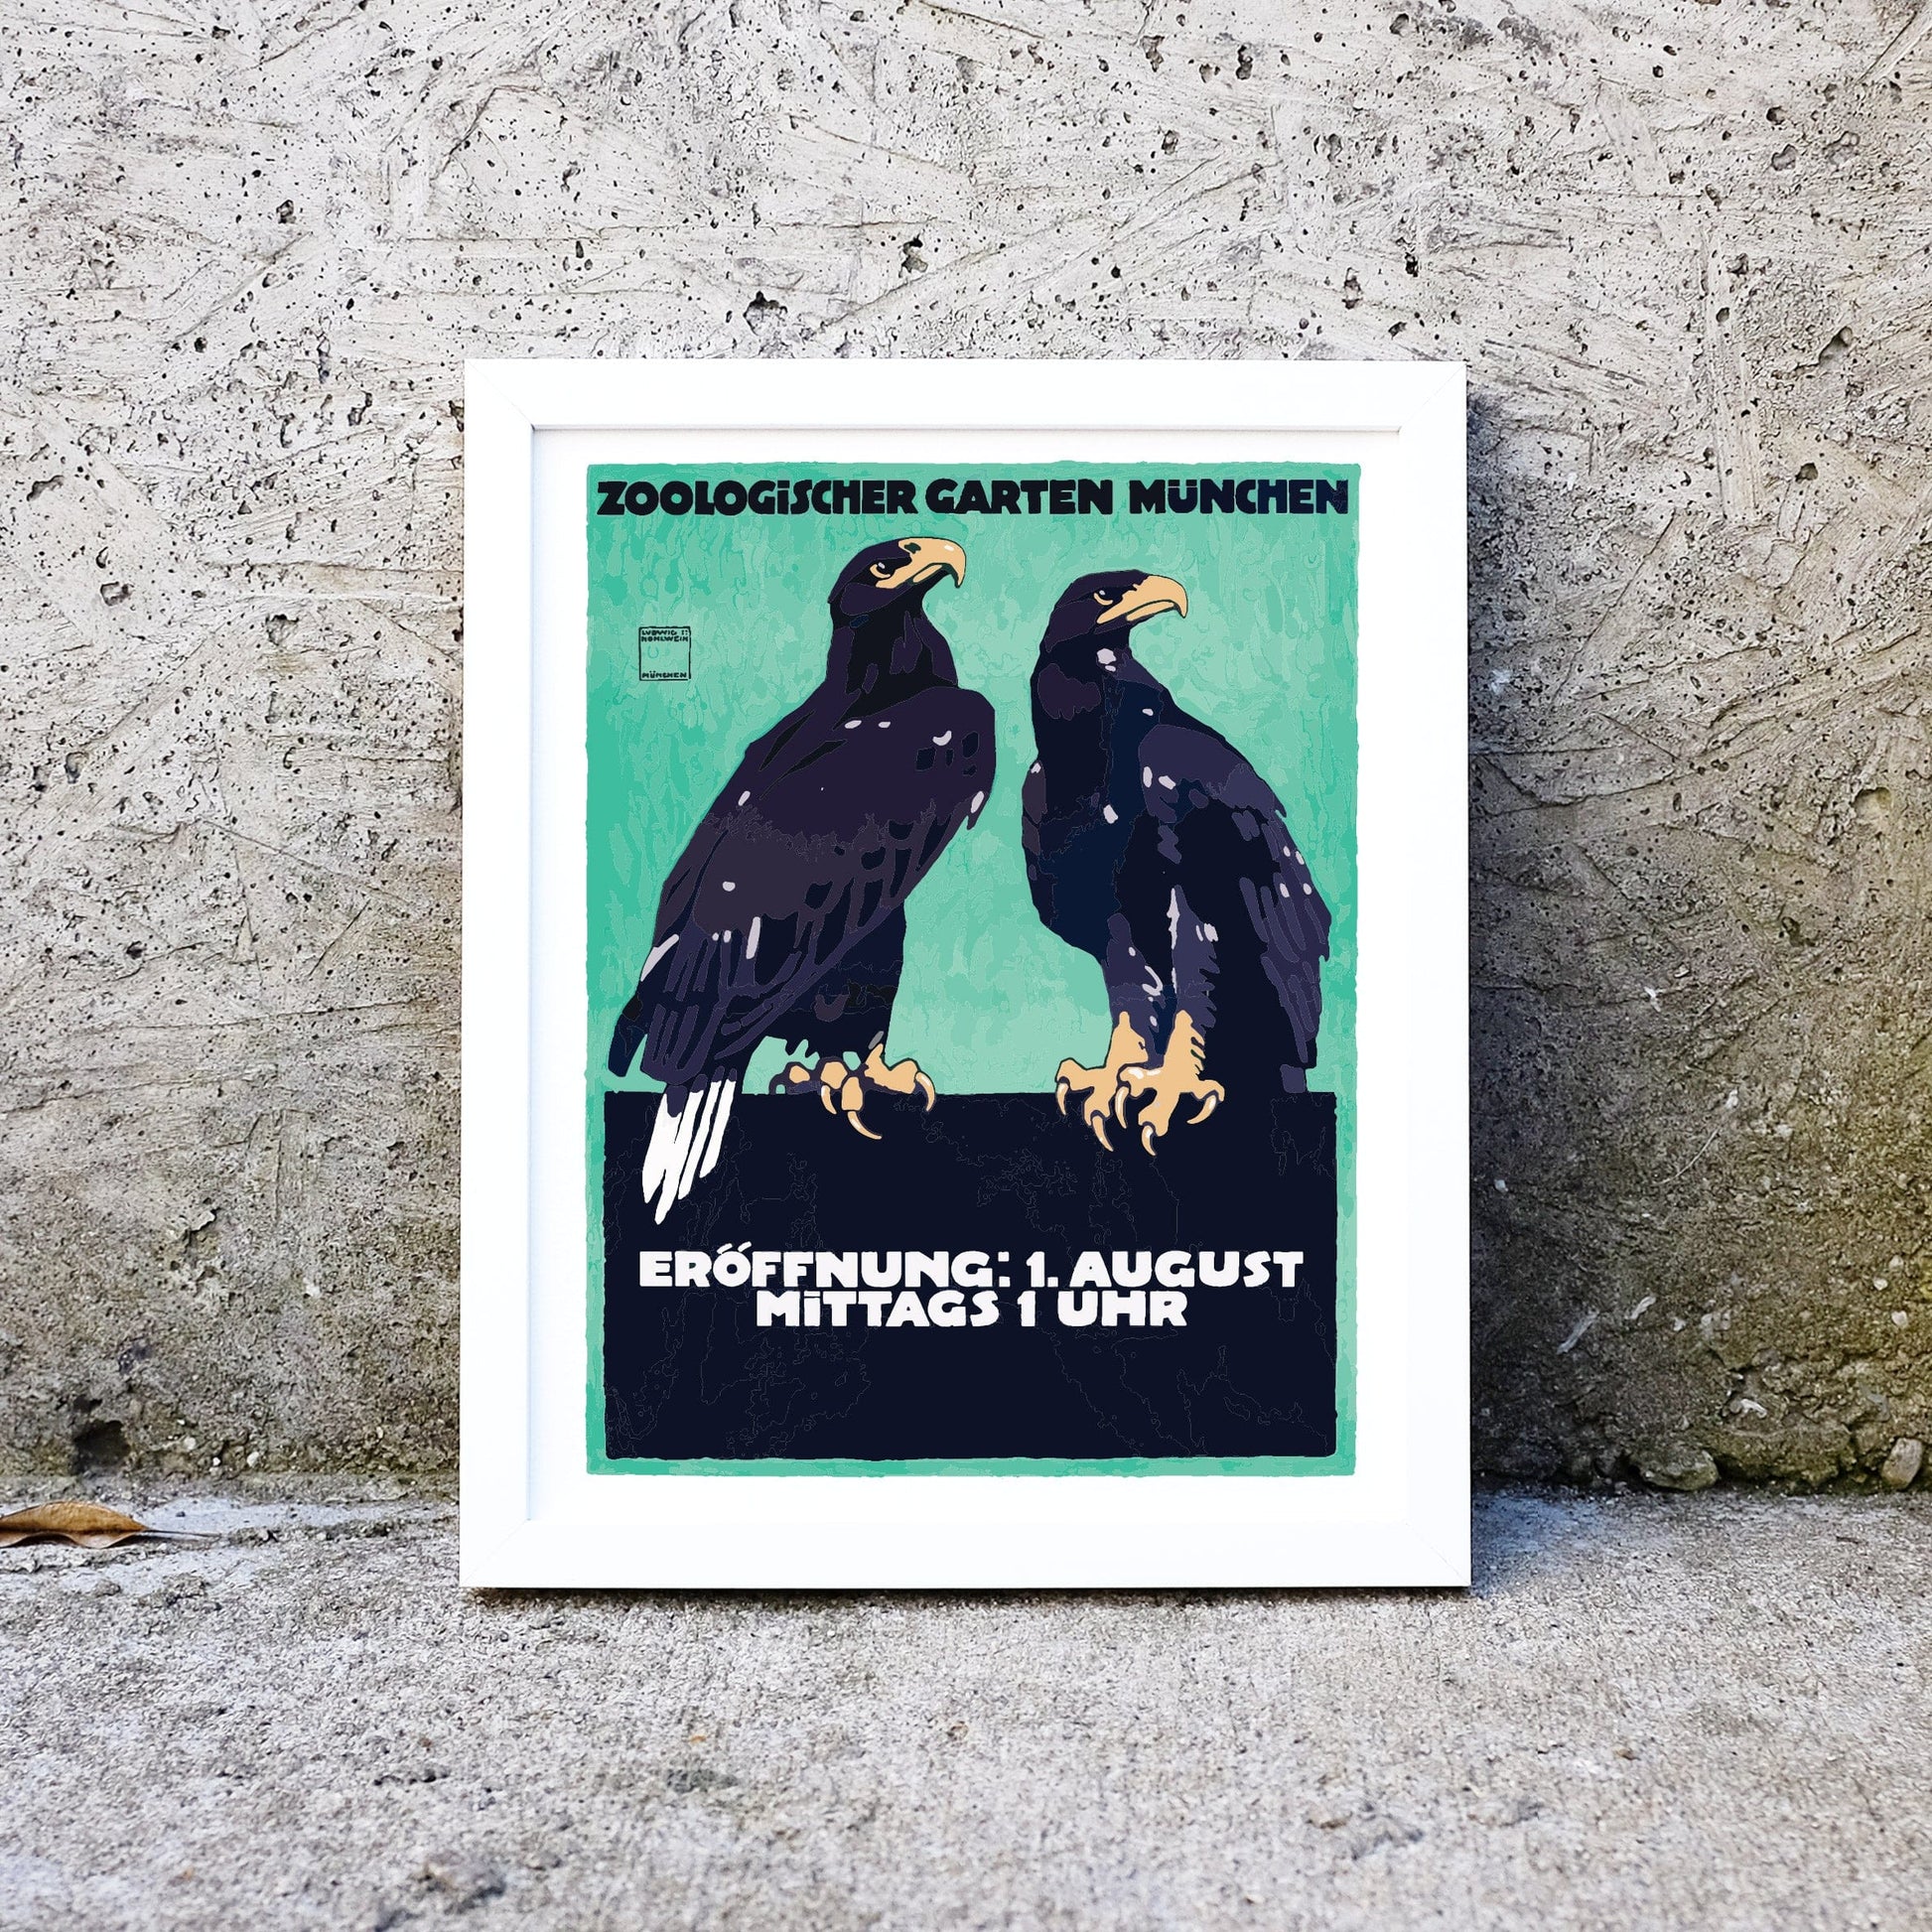 Zoologischer Garten Munchen vintage eagle zoo poster Vintage Advertising Prints